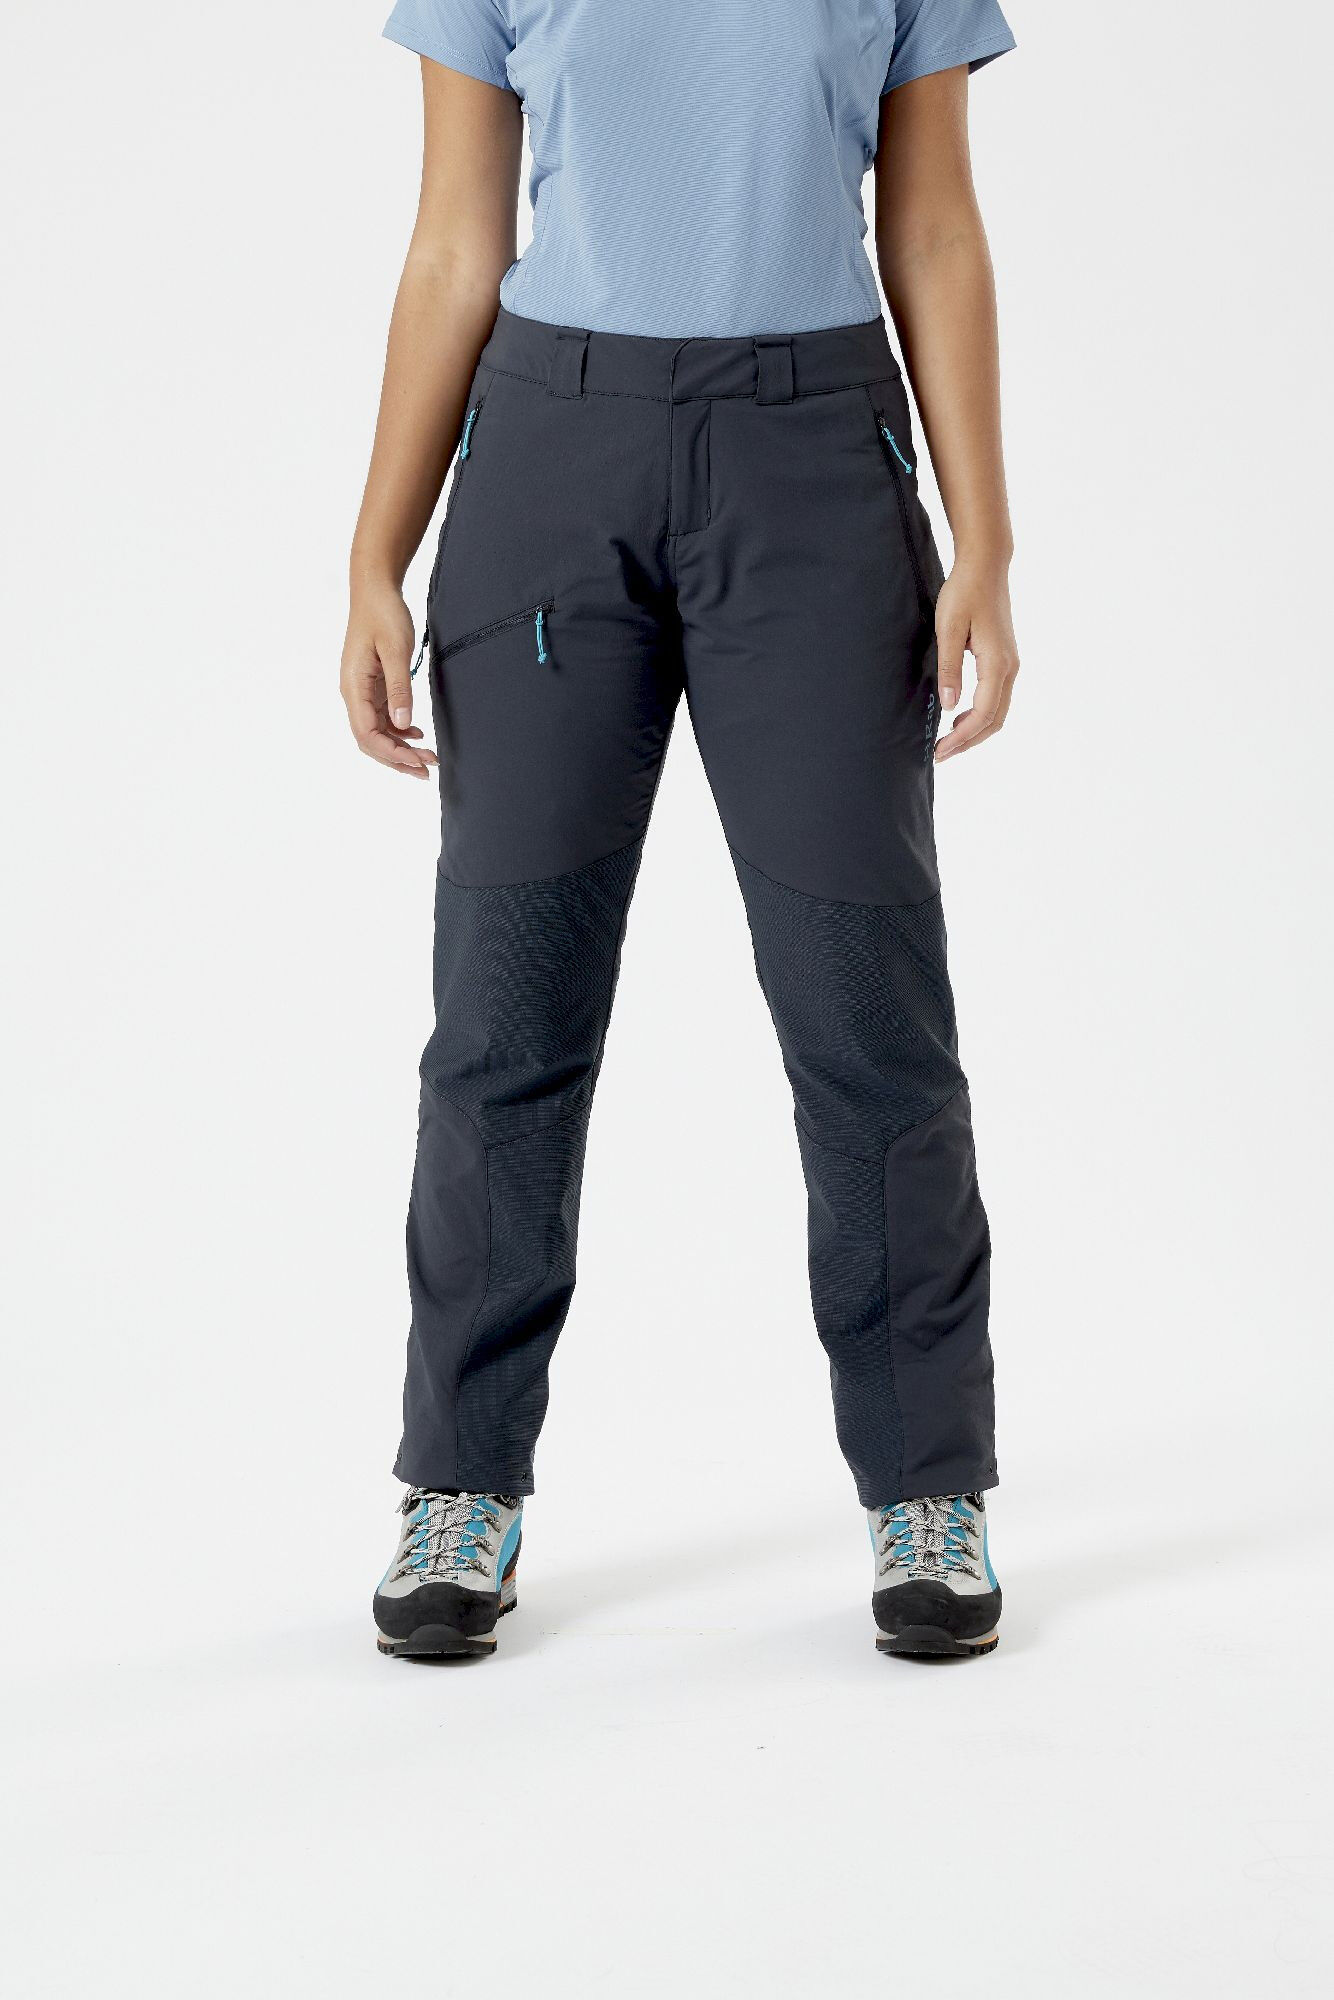 Rab Women's Torque Vapour-Rise Pants - Mountaineering trousers - Women's | Hardloop